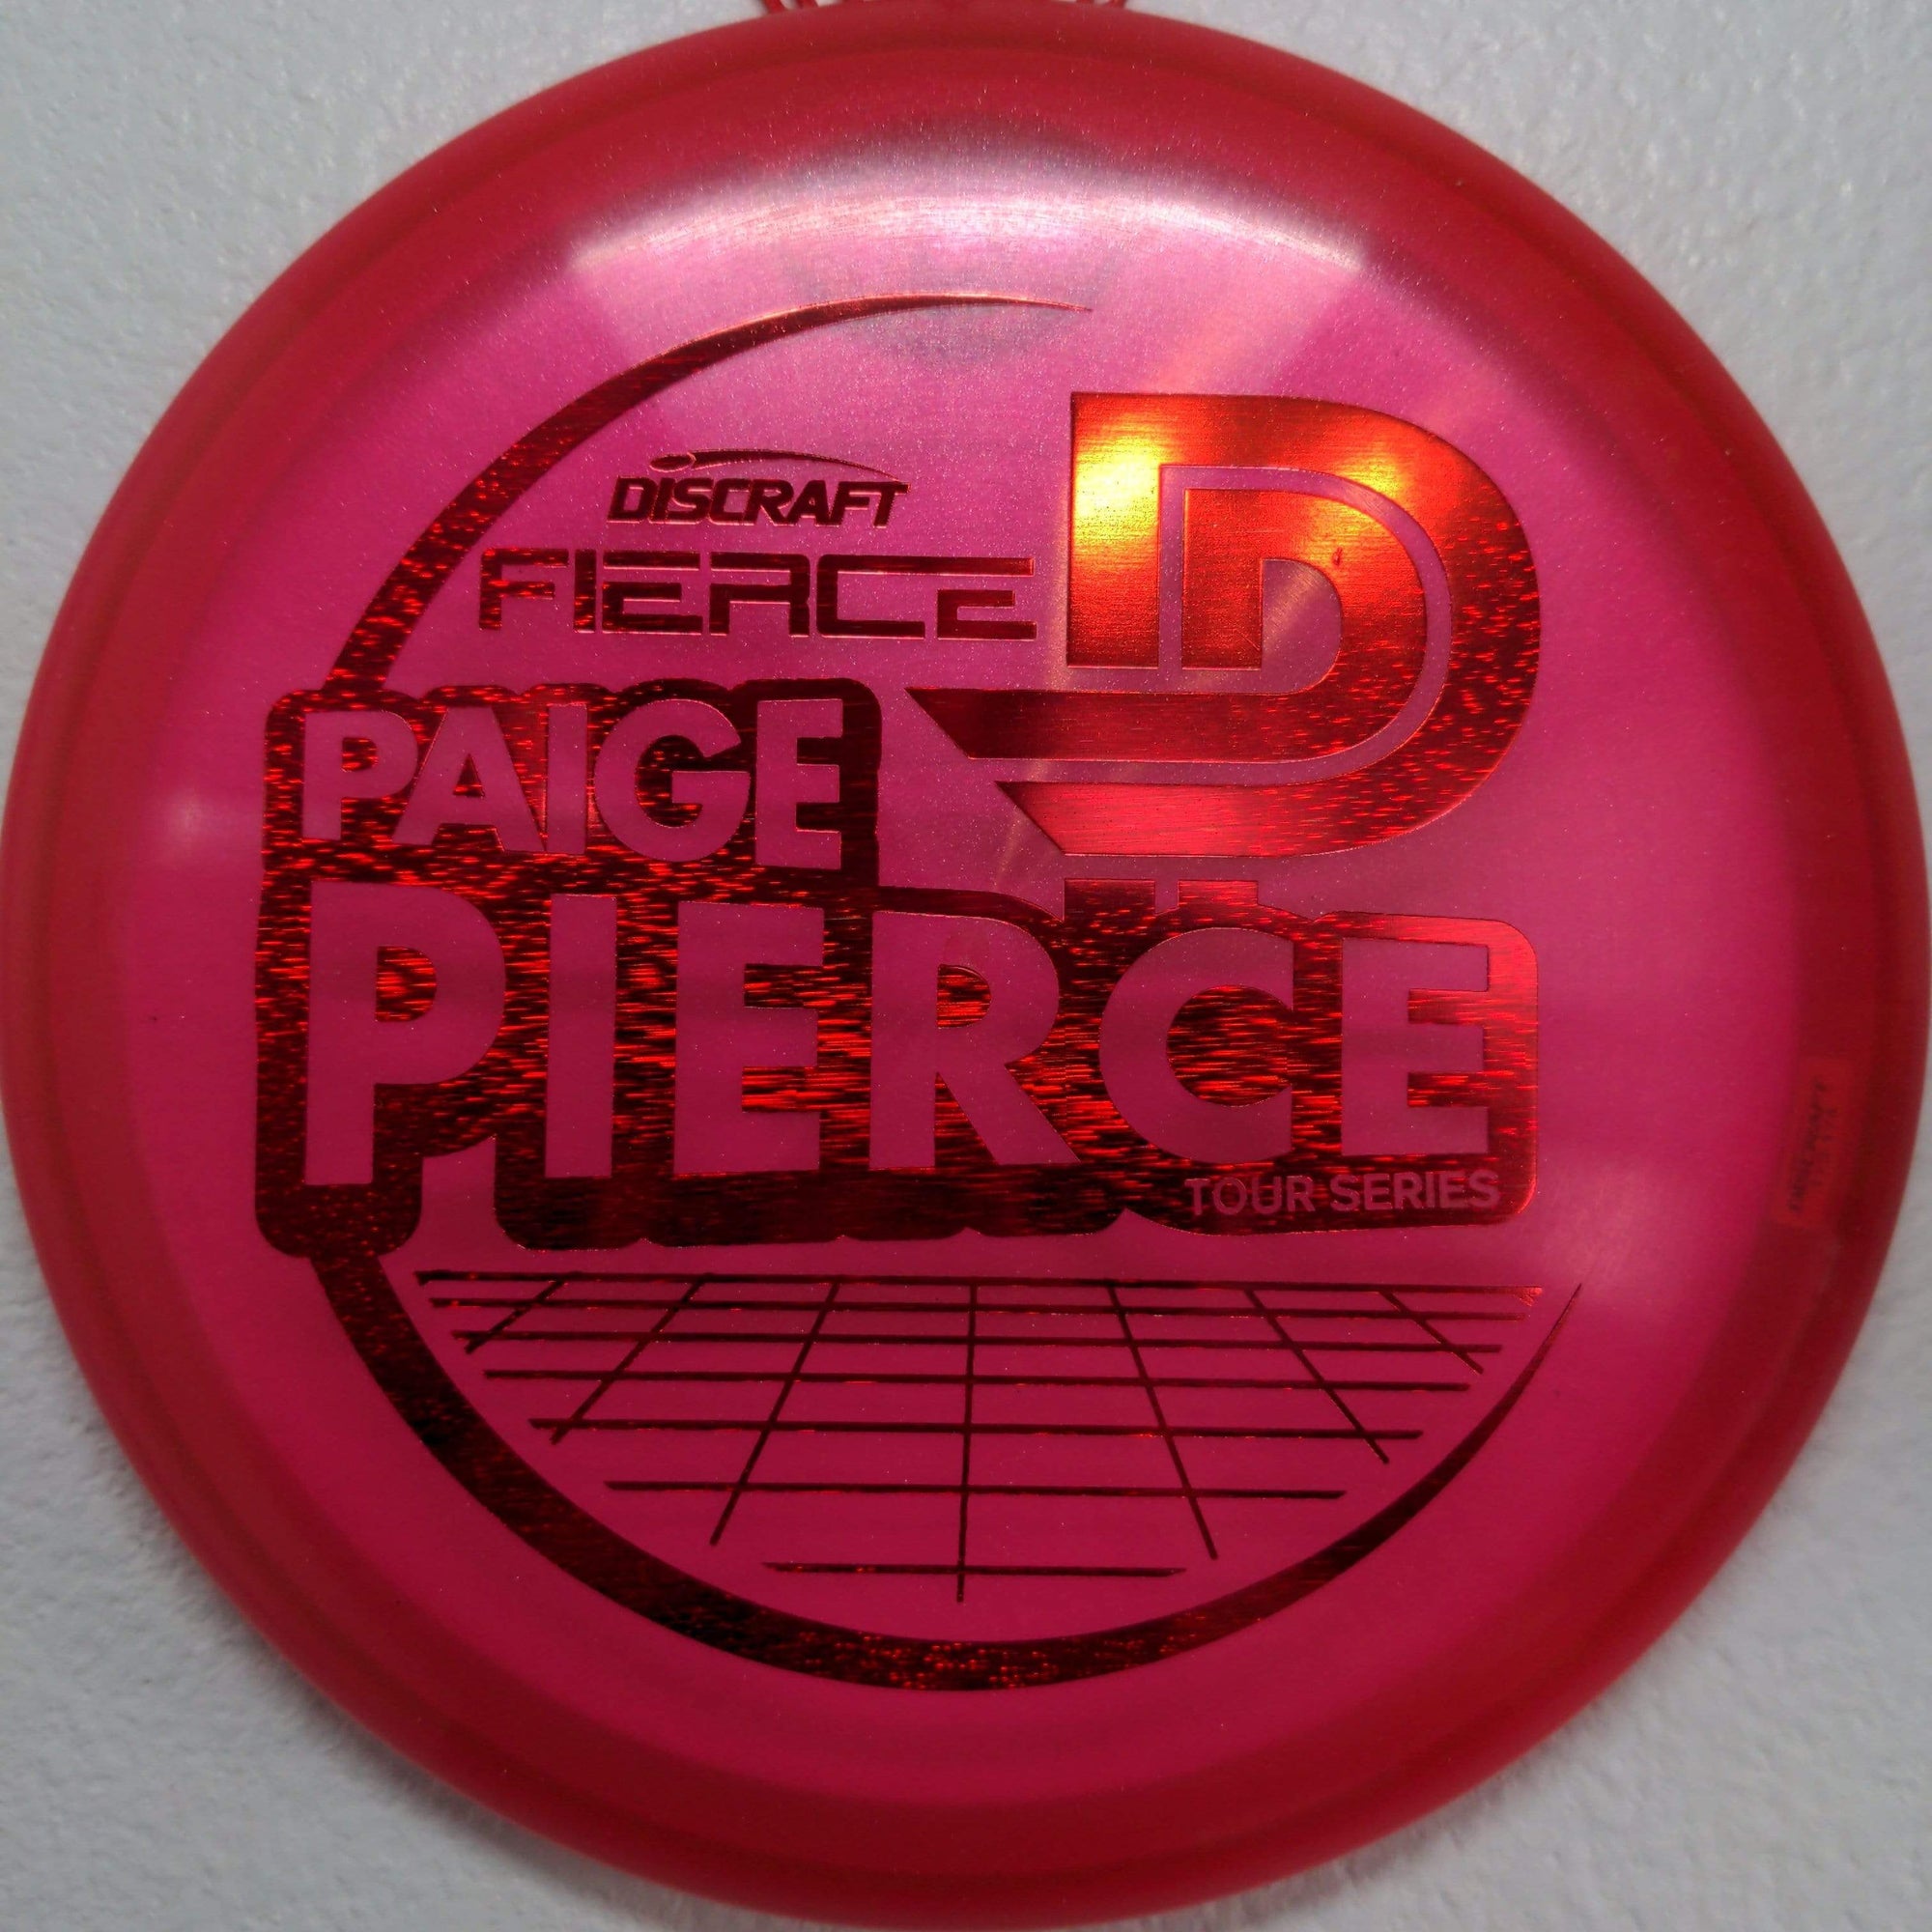 Discraft Putter Blue With Silver Stamp 176.3g Paige Pierce Tour Series Fierce, 2021